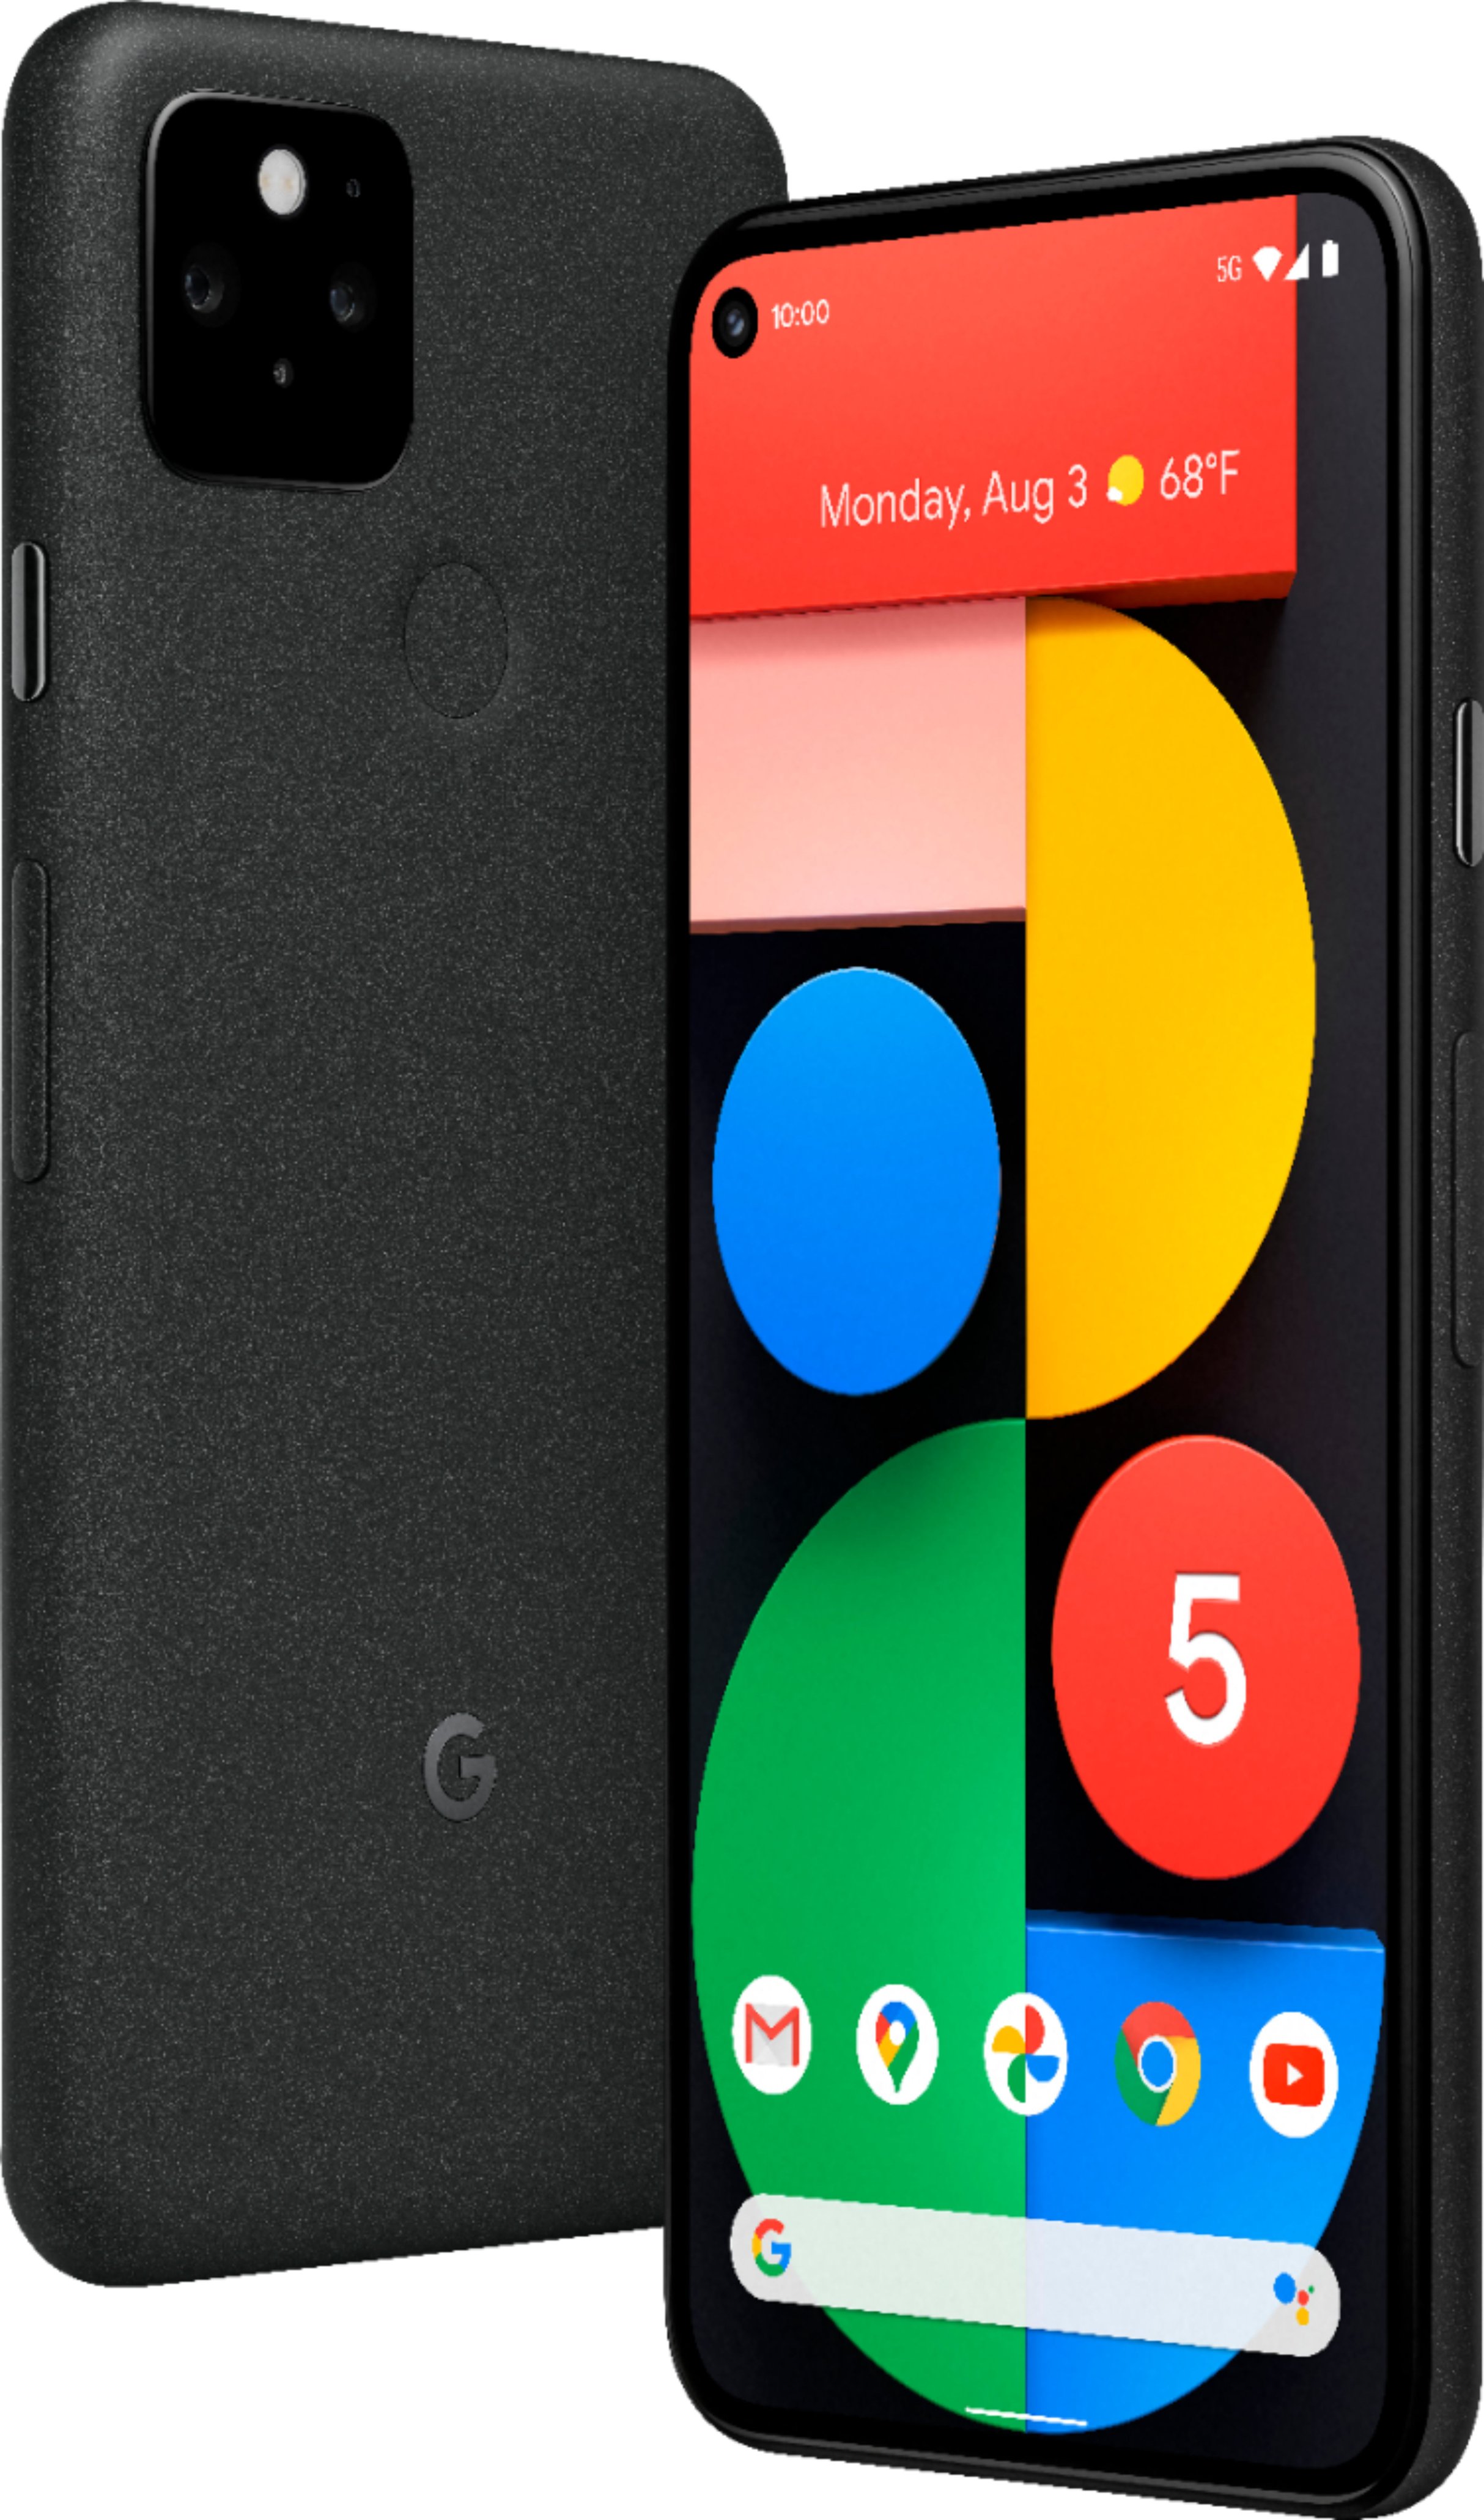 Google Pixel 5 5G 128GB (Unlocked) Just Black GA01316 .. - Best Buy